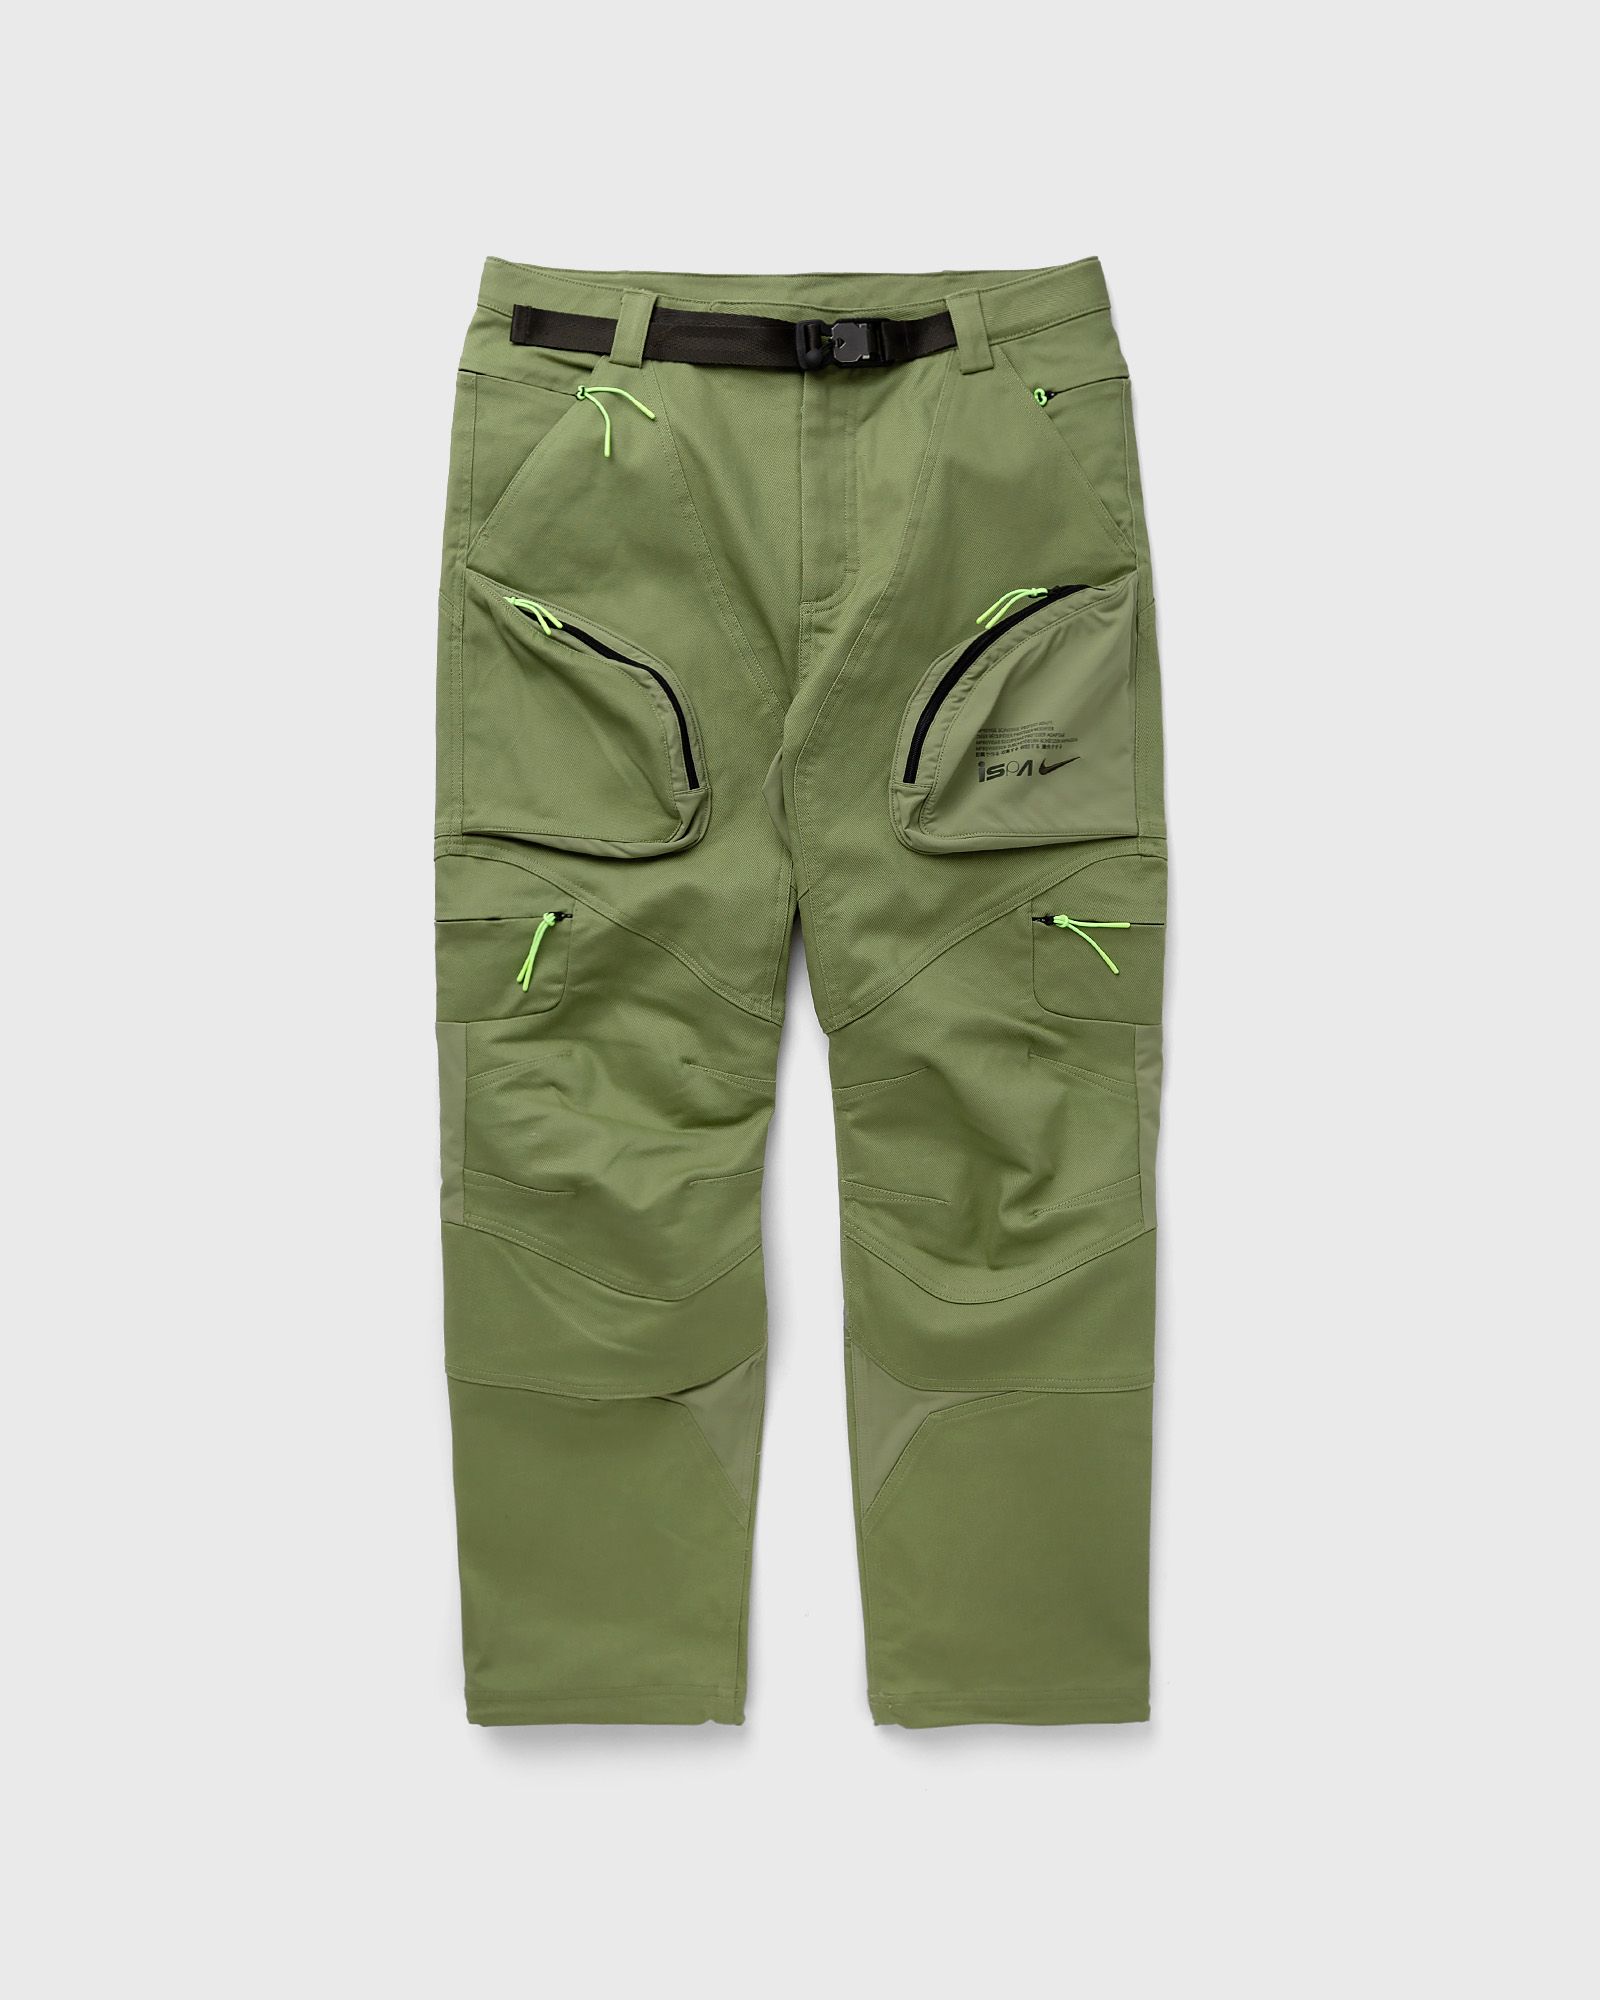 Nike - ispa pant 2.0 men cargo pants green in größe:l